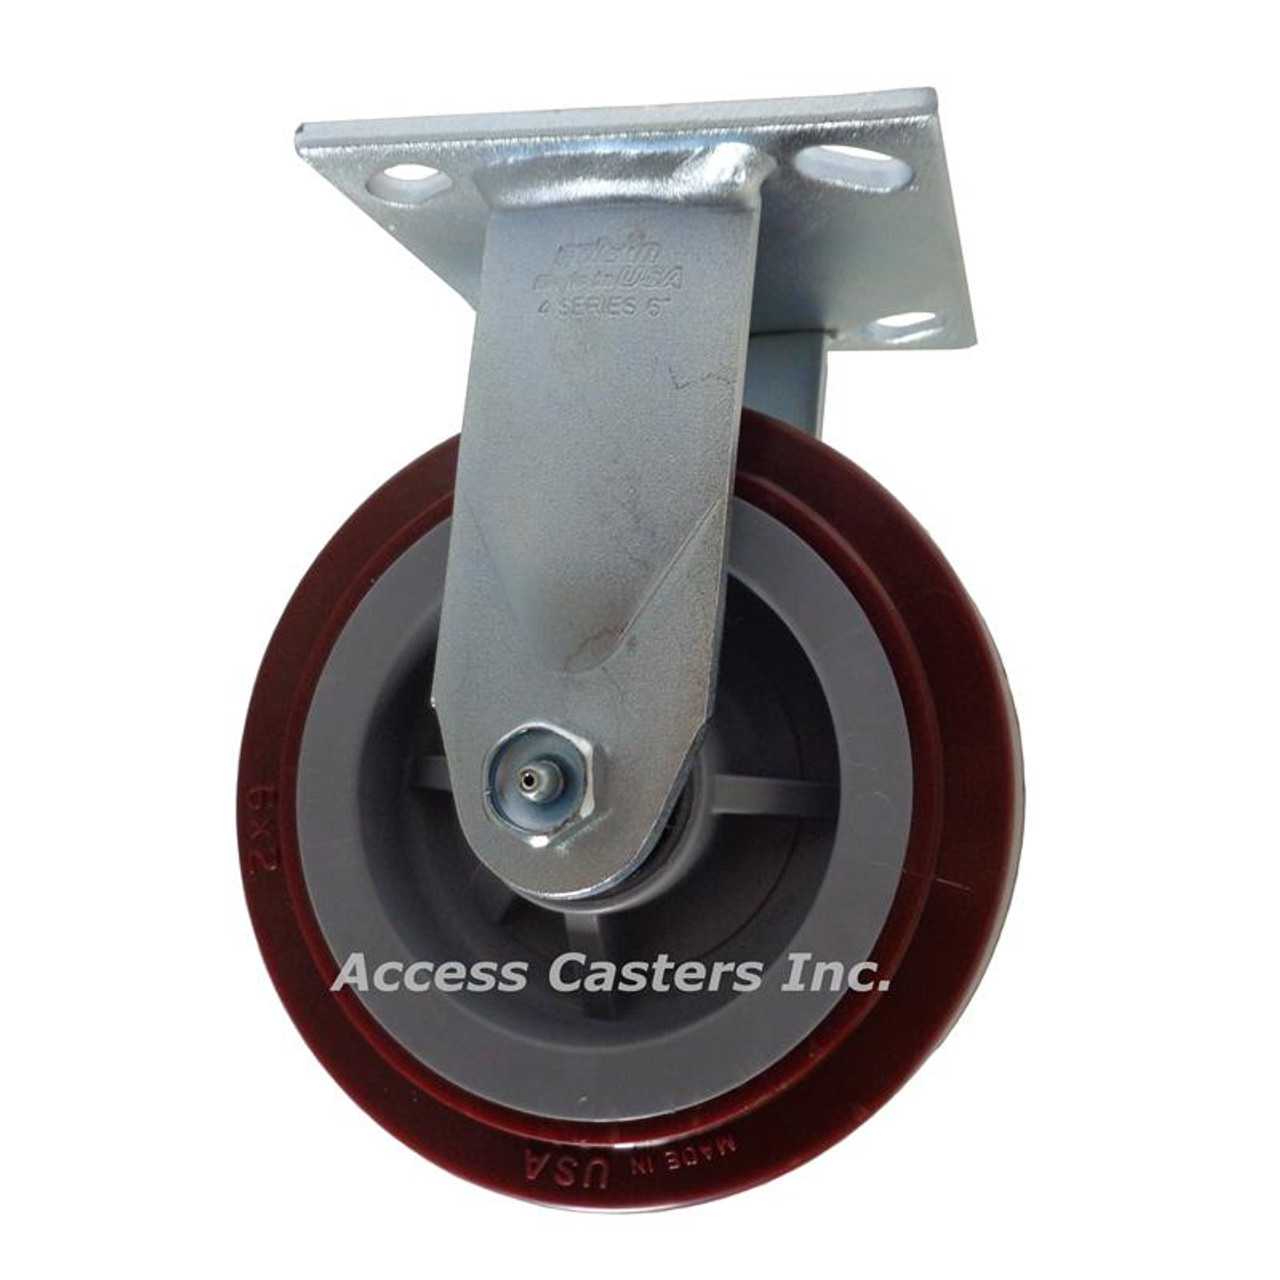 4.05108.929 Colson 5" Rigid Caster with Polyurethane HI-TECH Wheel